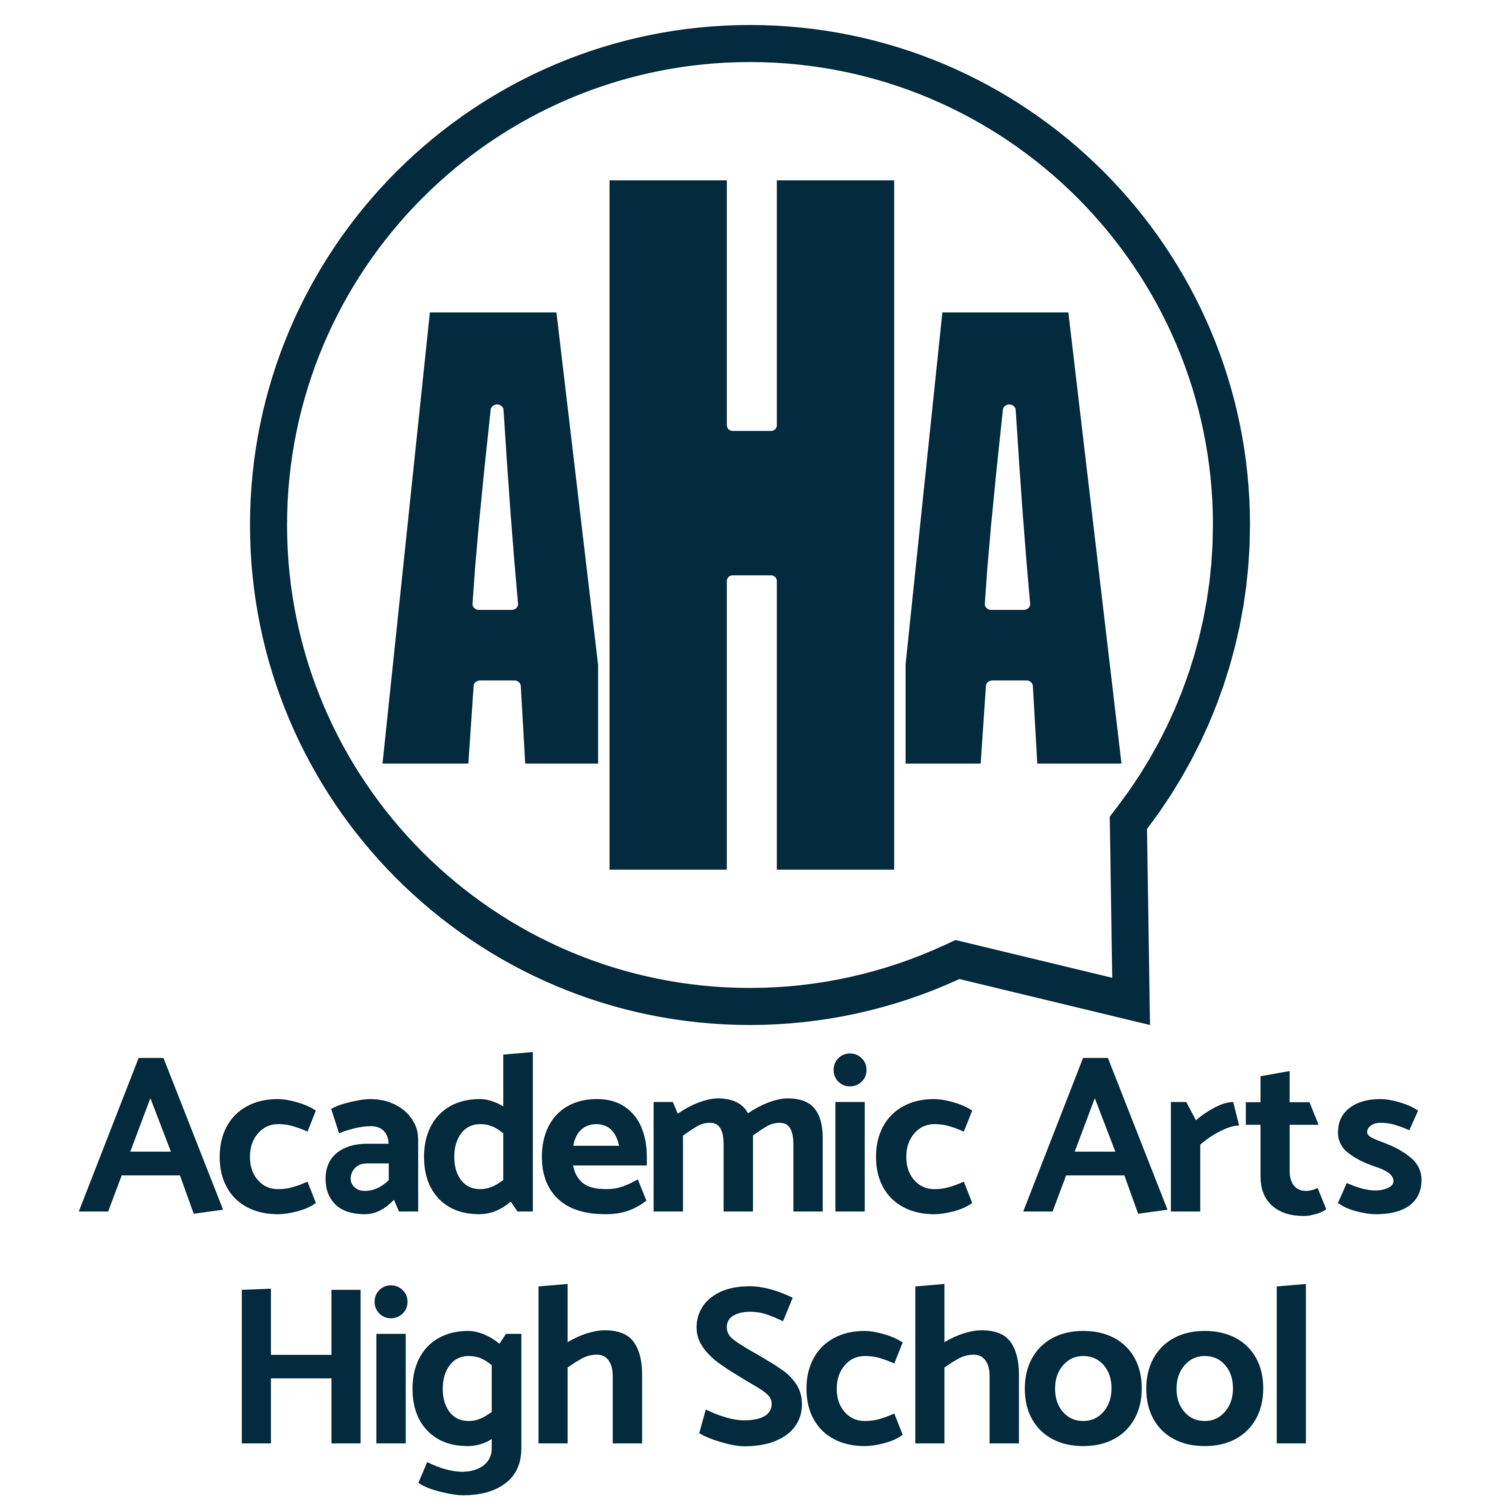 Academic Arts High School